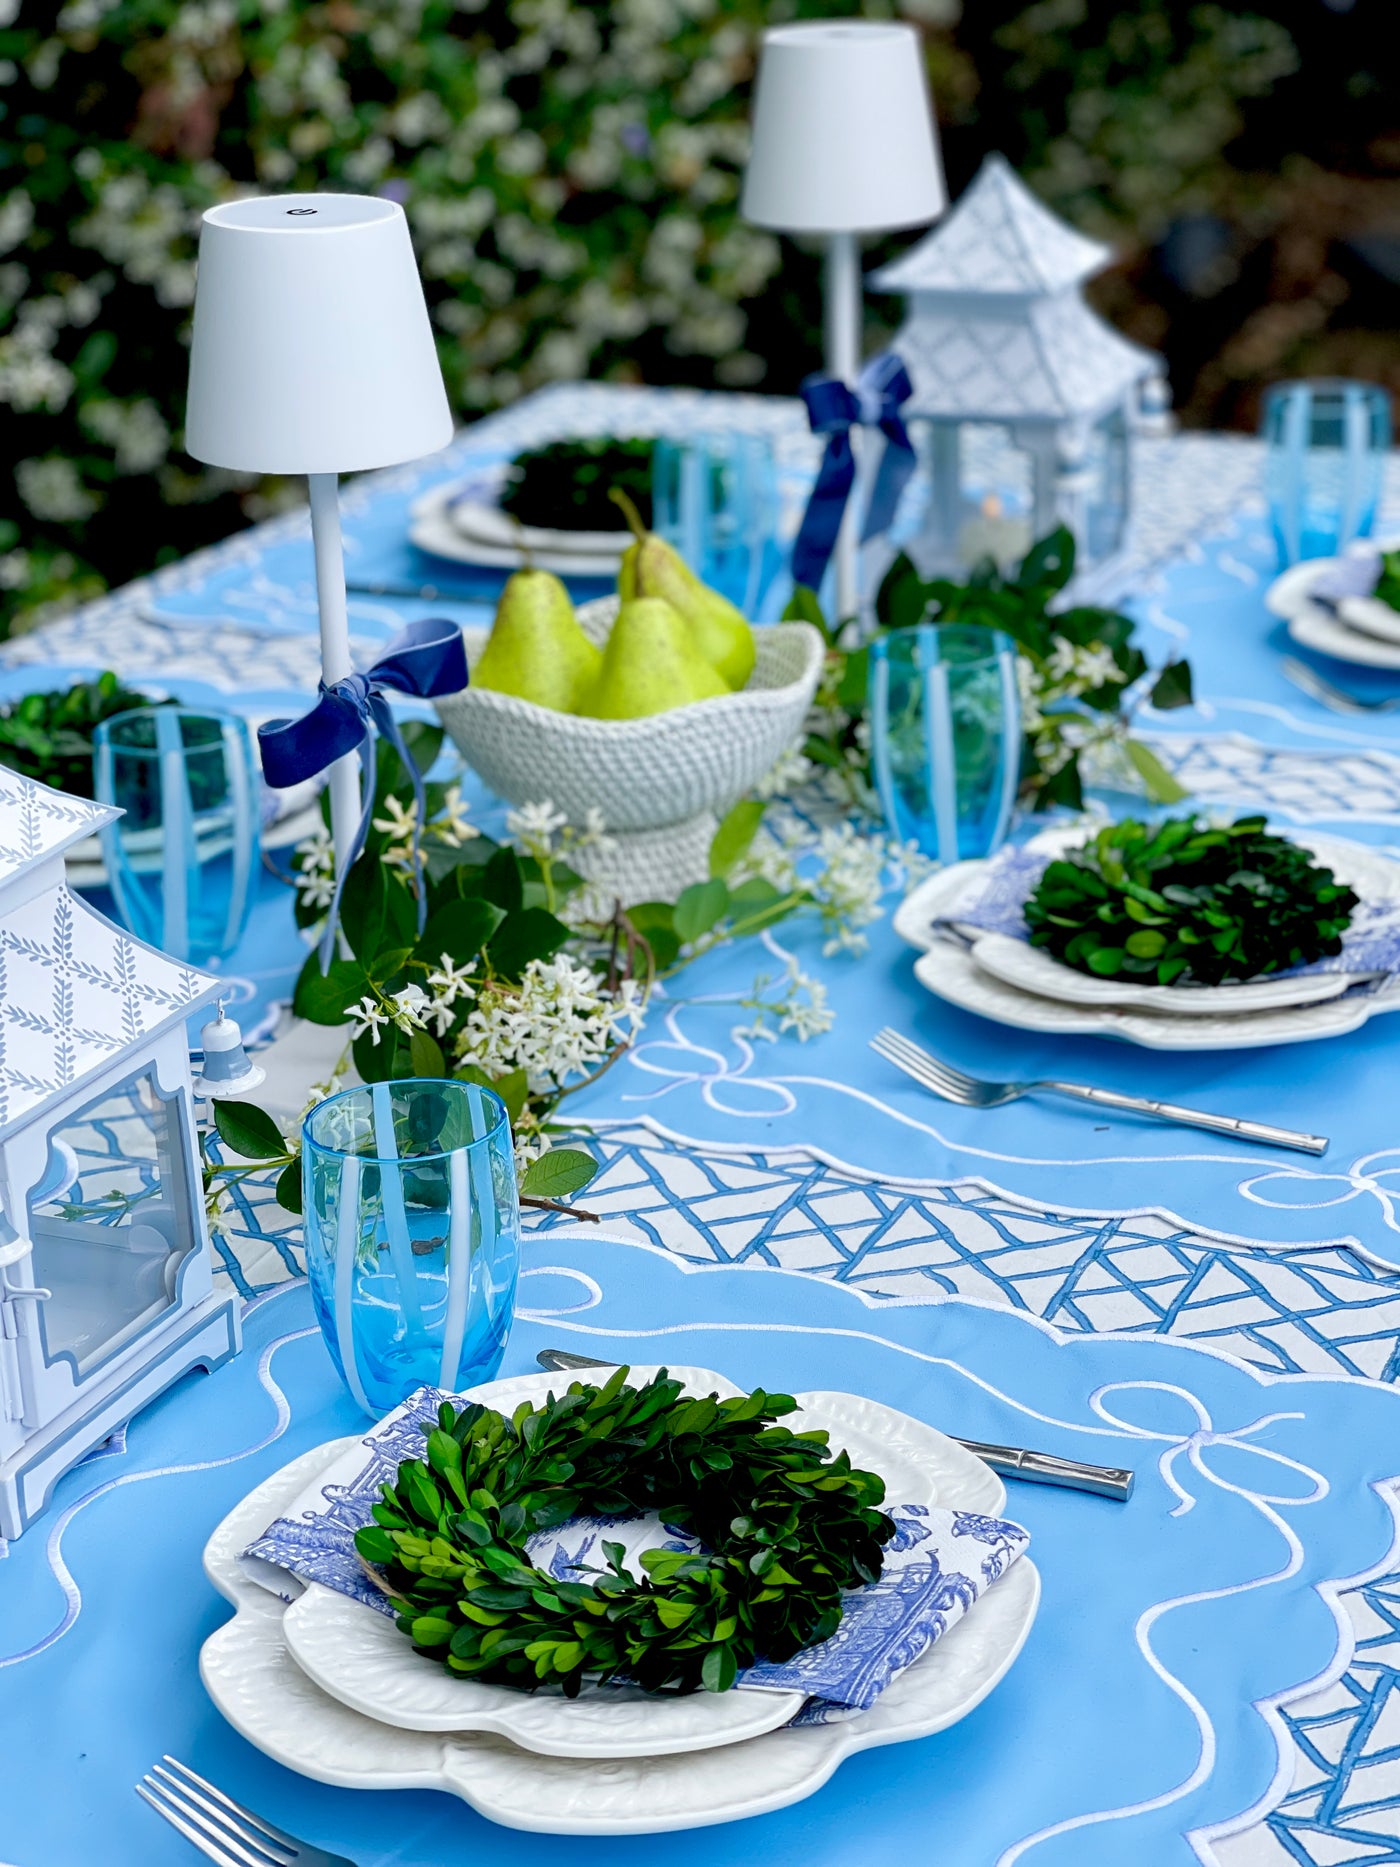 Hand Block Printed Cotton Tablecloth 'Lattice - Blue'